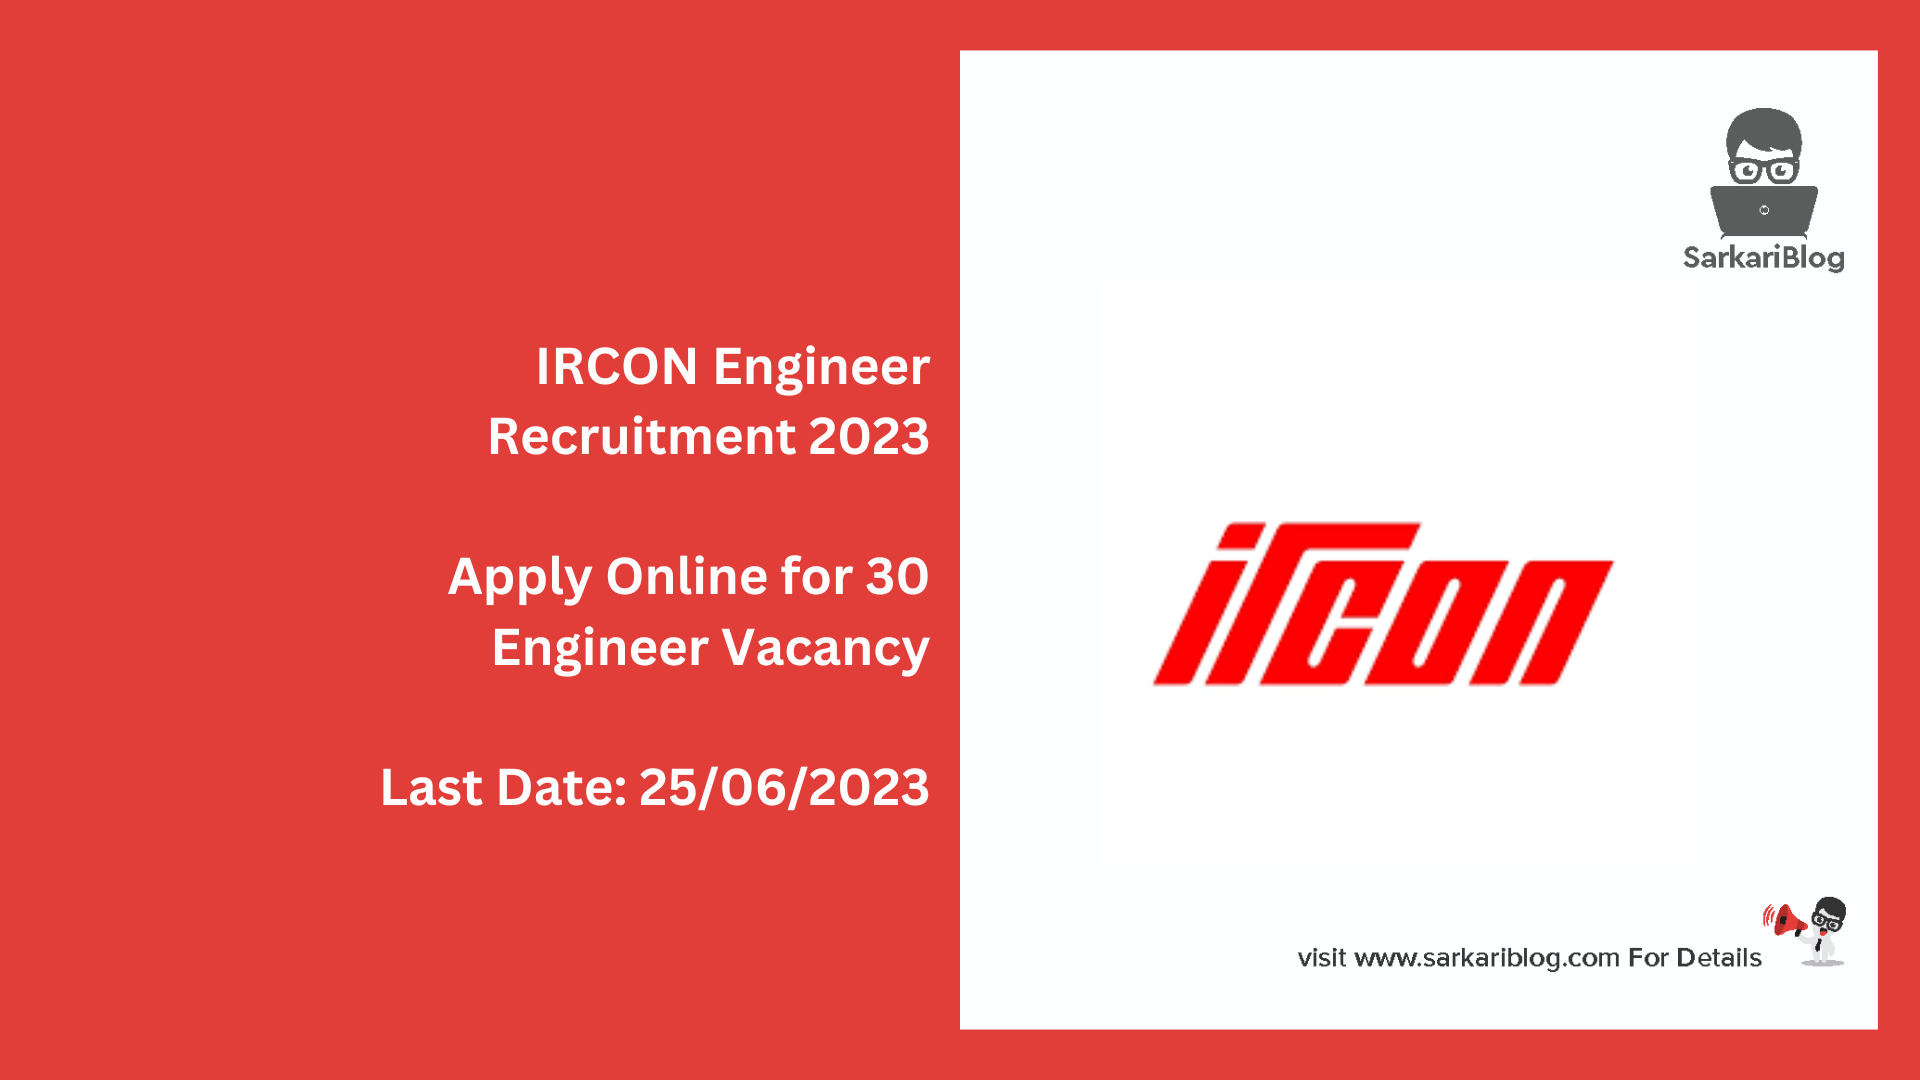 IRCON Engineer Recruitment 2023